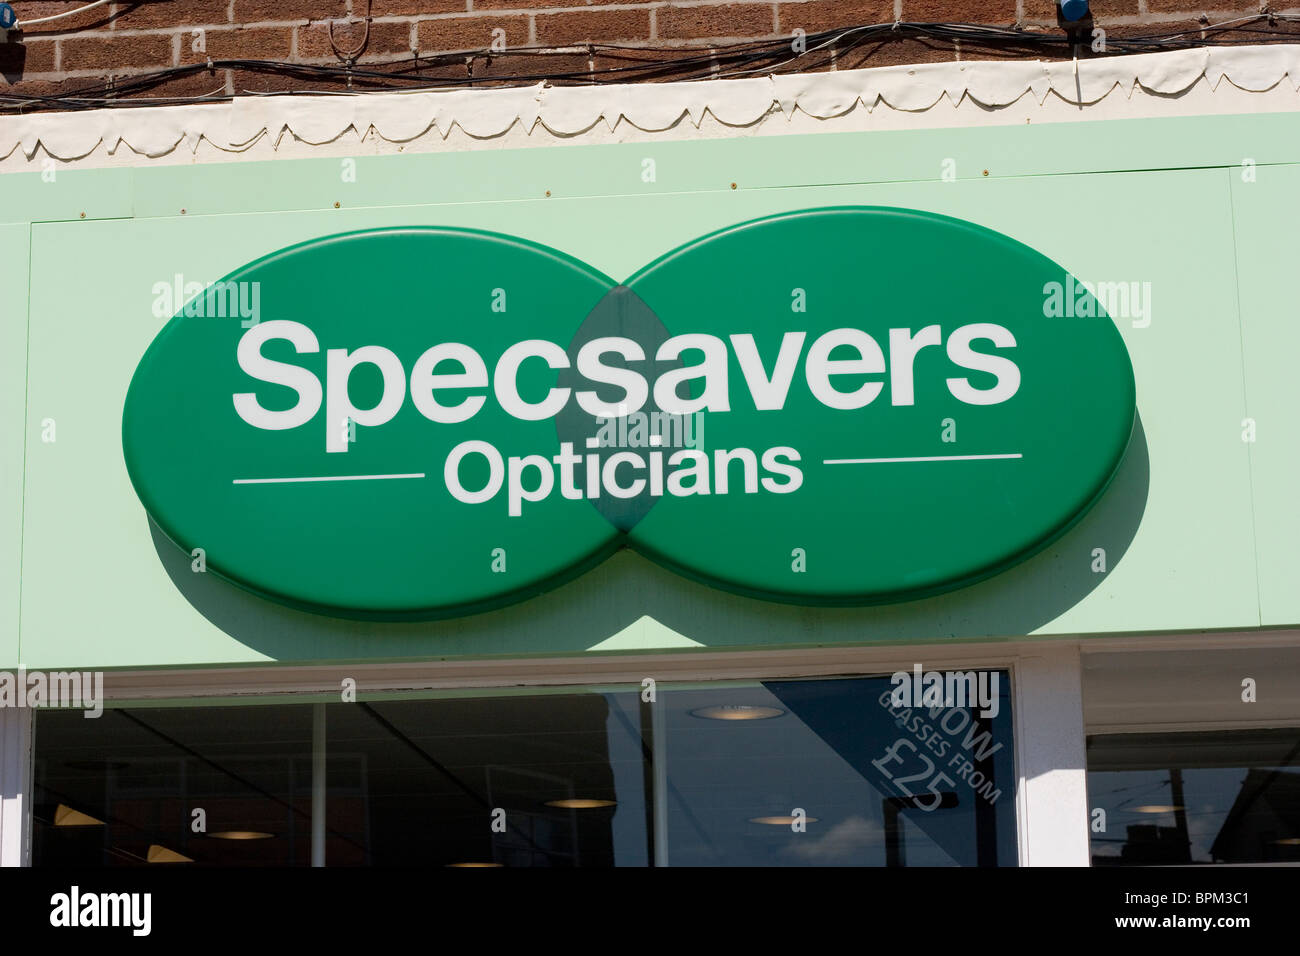 Specsavers Opticians sign Stock Photo